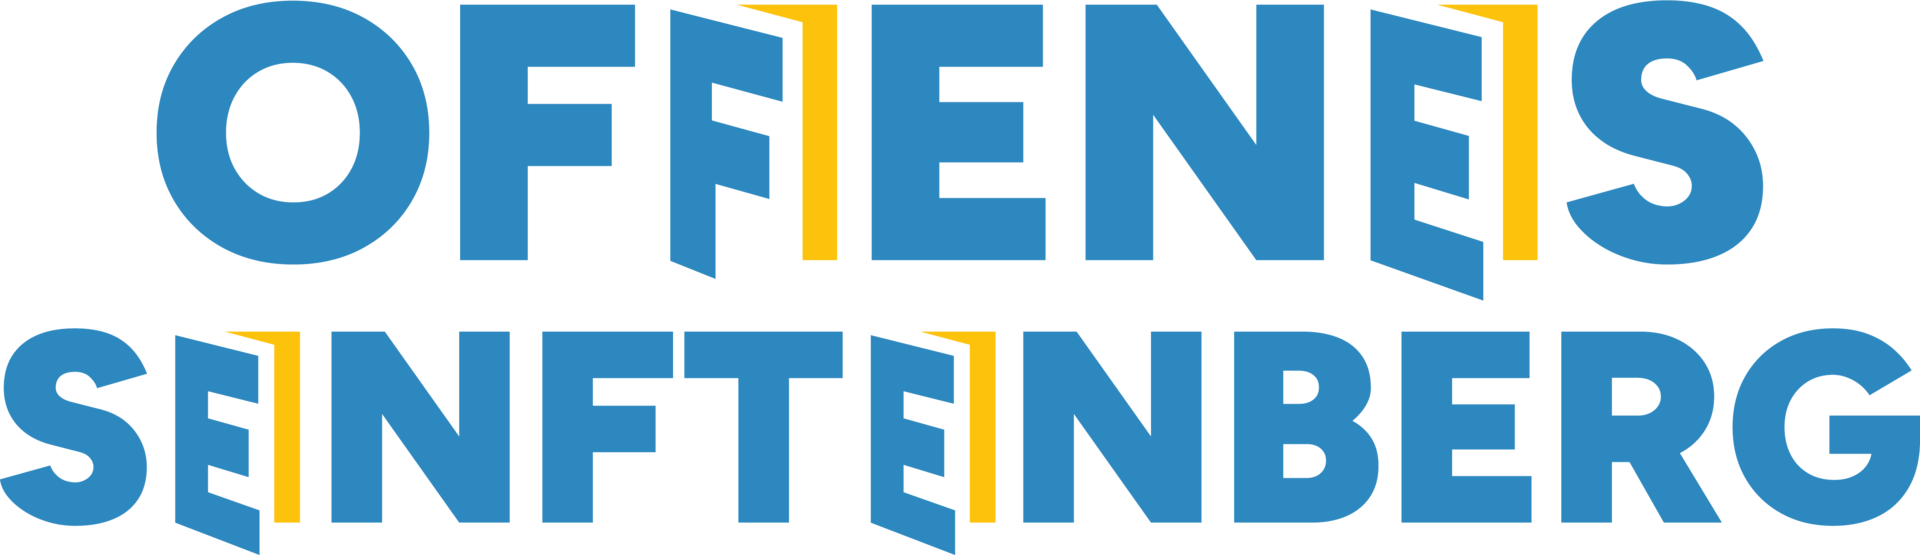 Offenes-Senftenberg_Logo_farbig